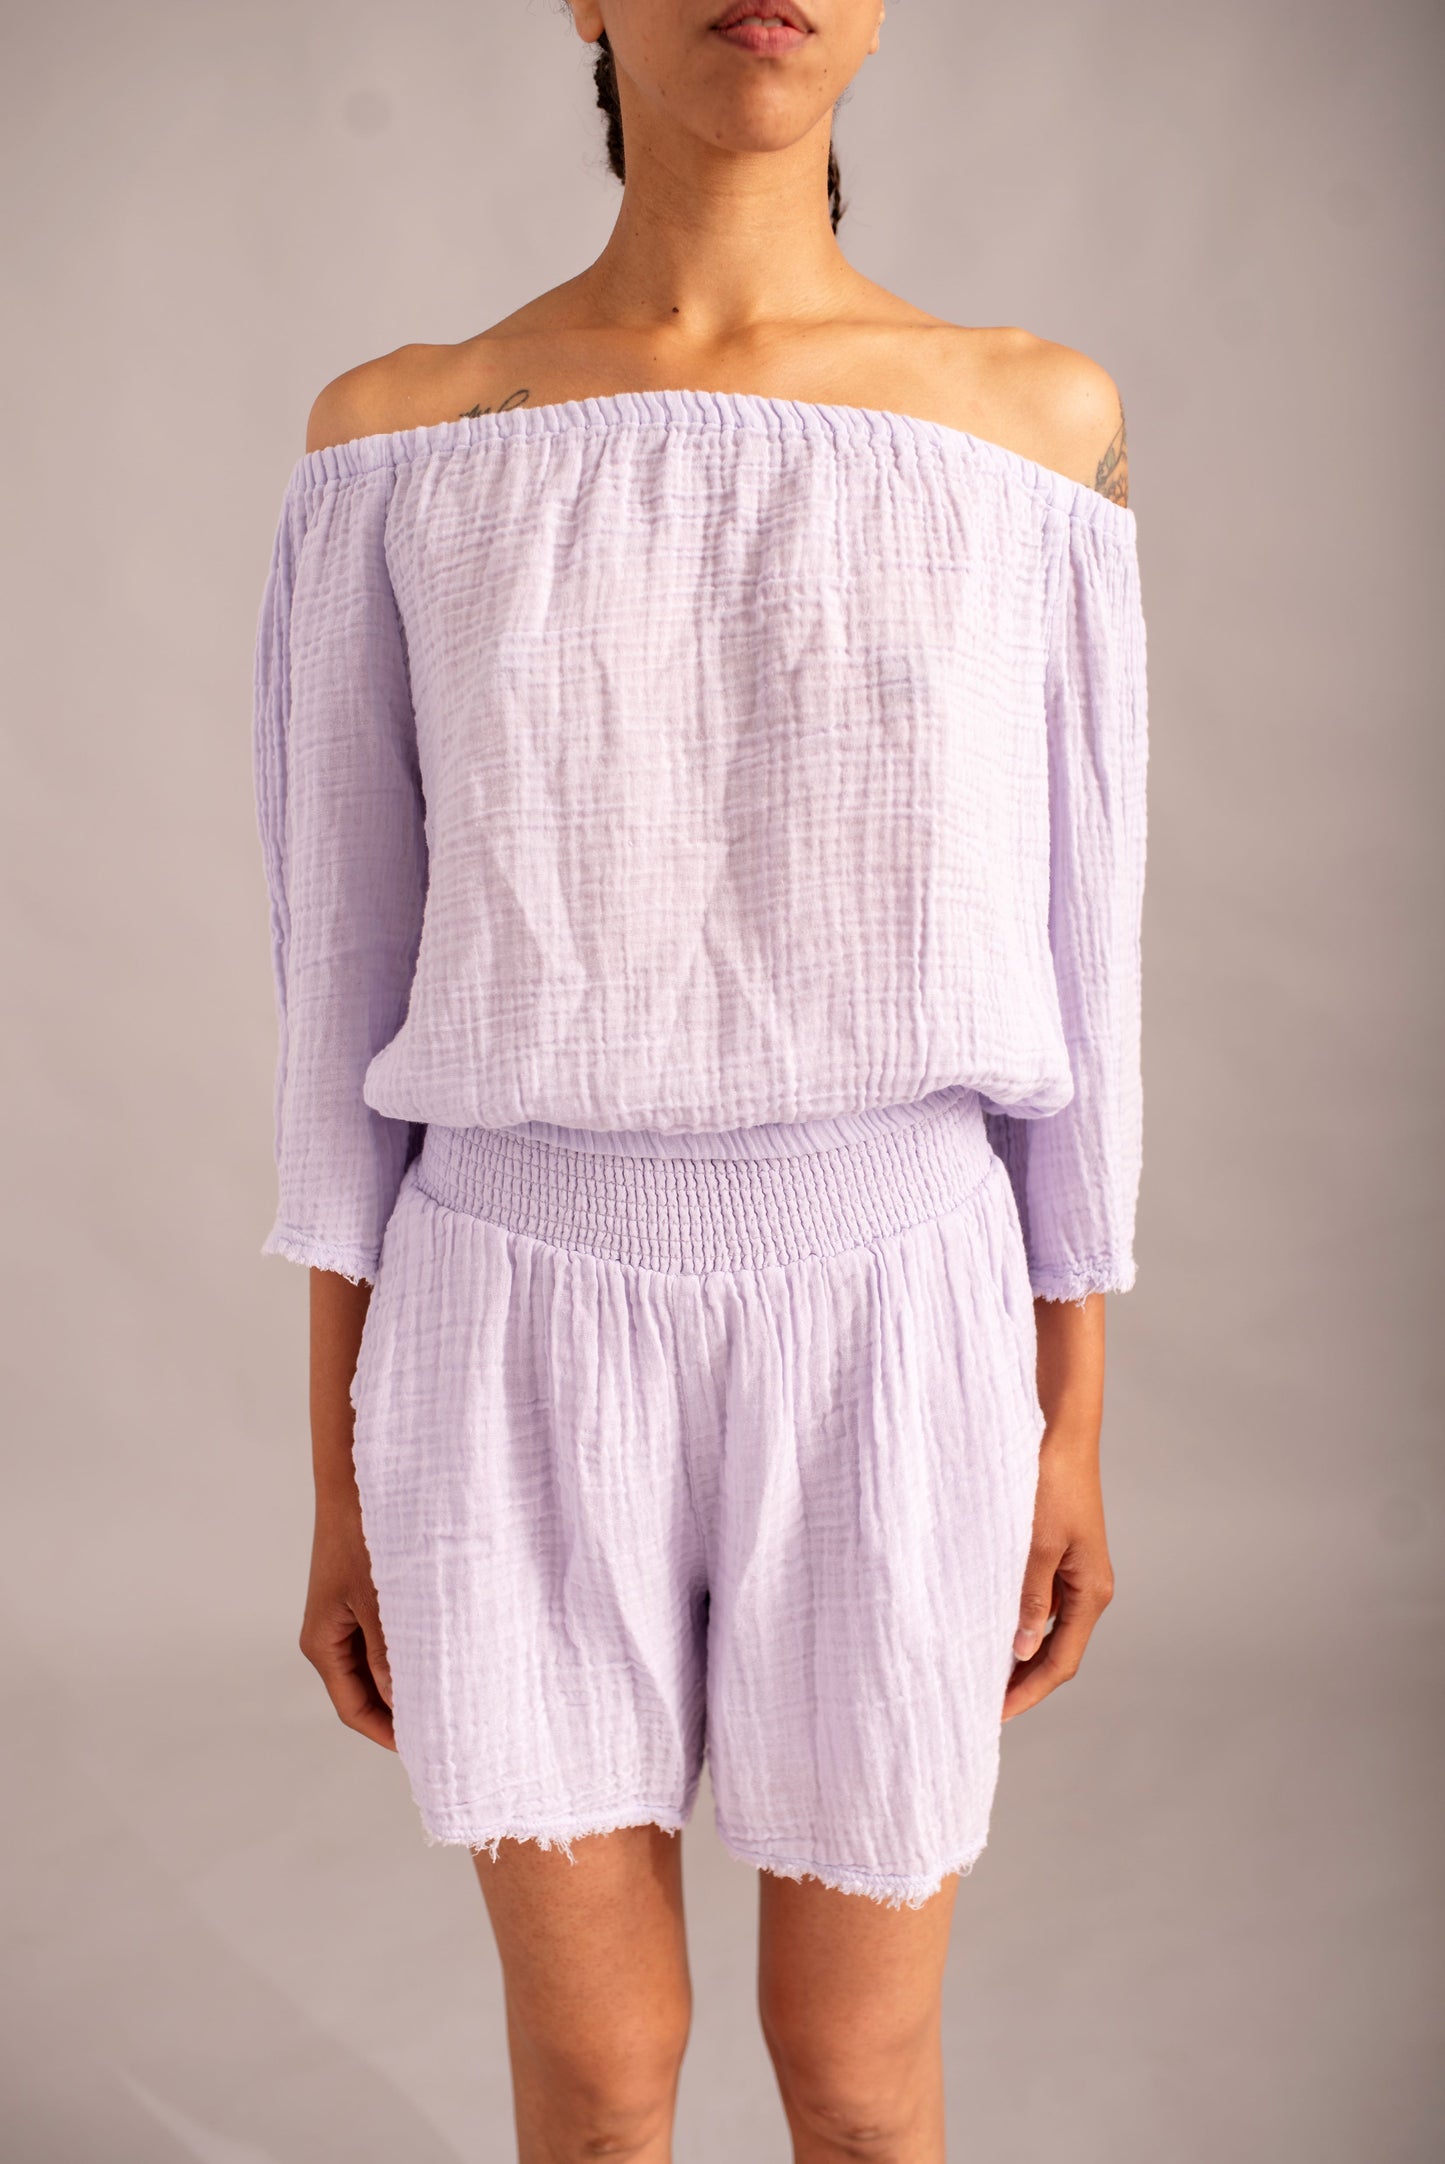 Sia amethyst shorts in cotton gauze